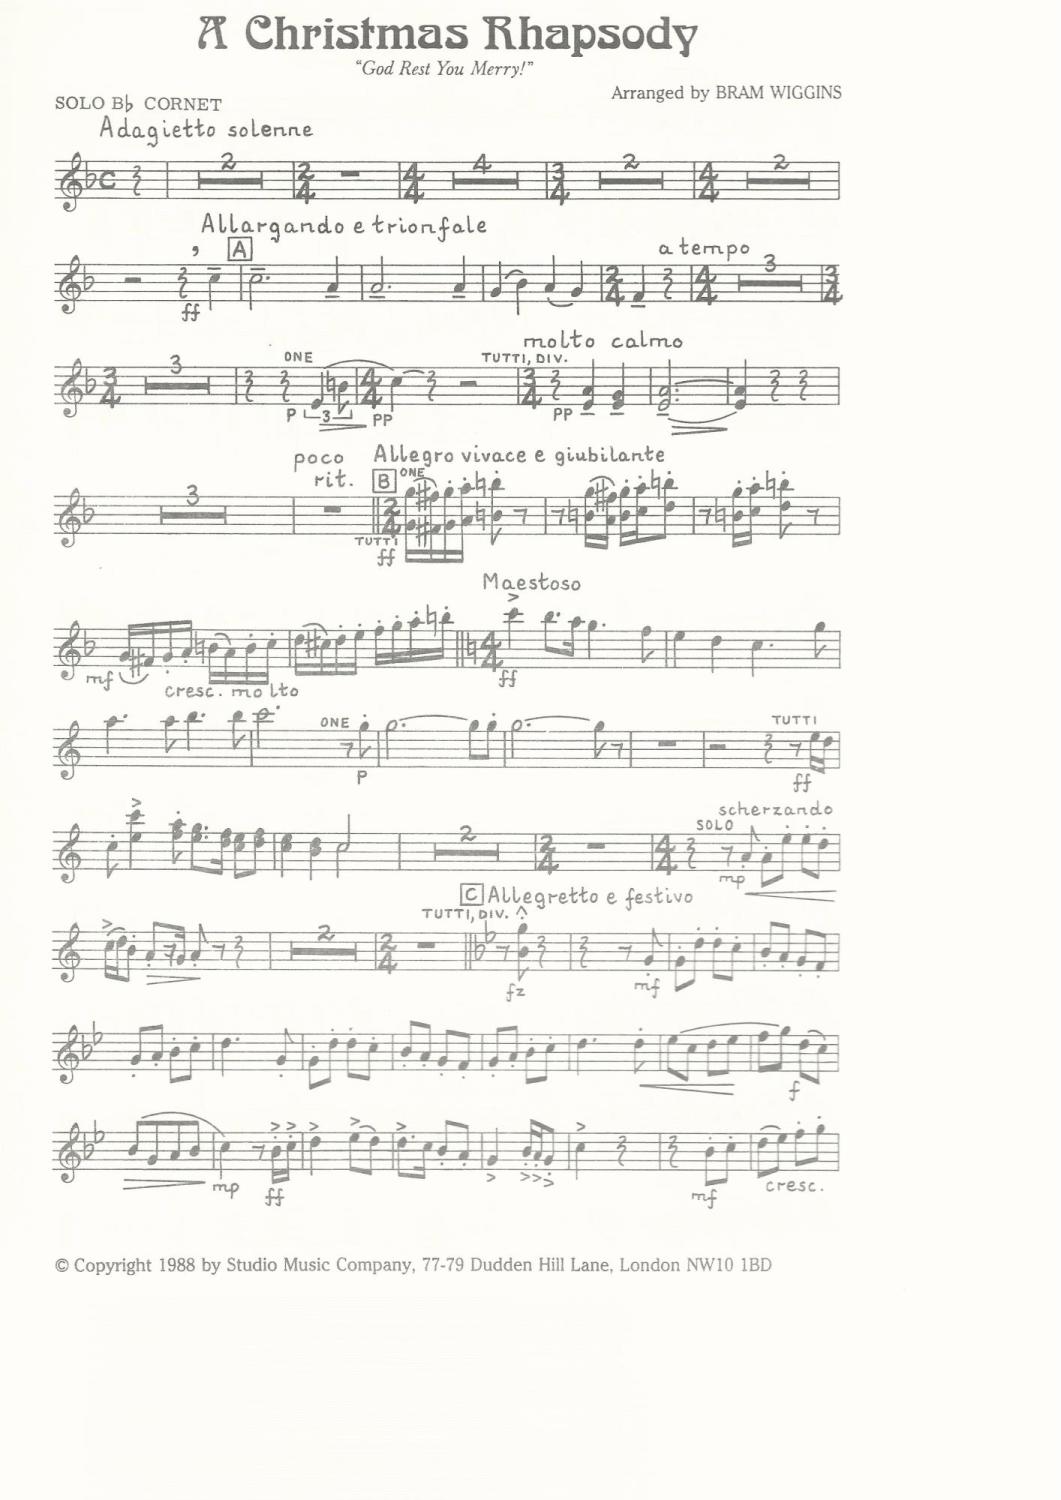 A Christmas Rhapsody for Brass Band - arr. Bram Wiggins